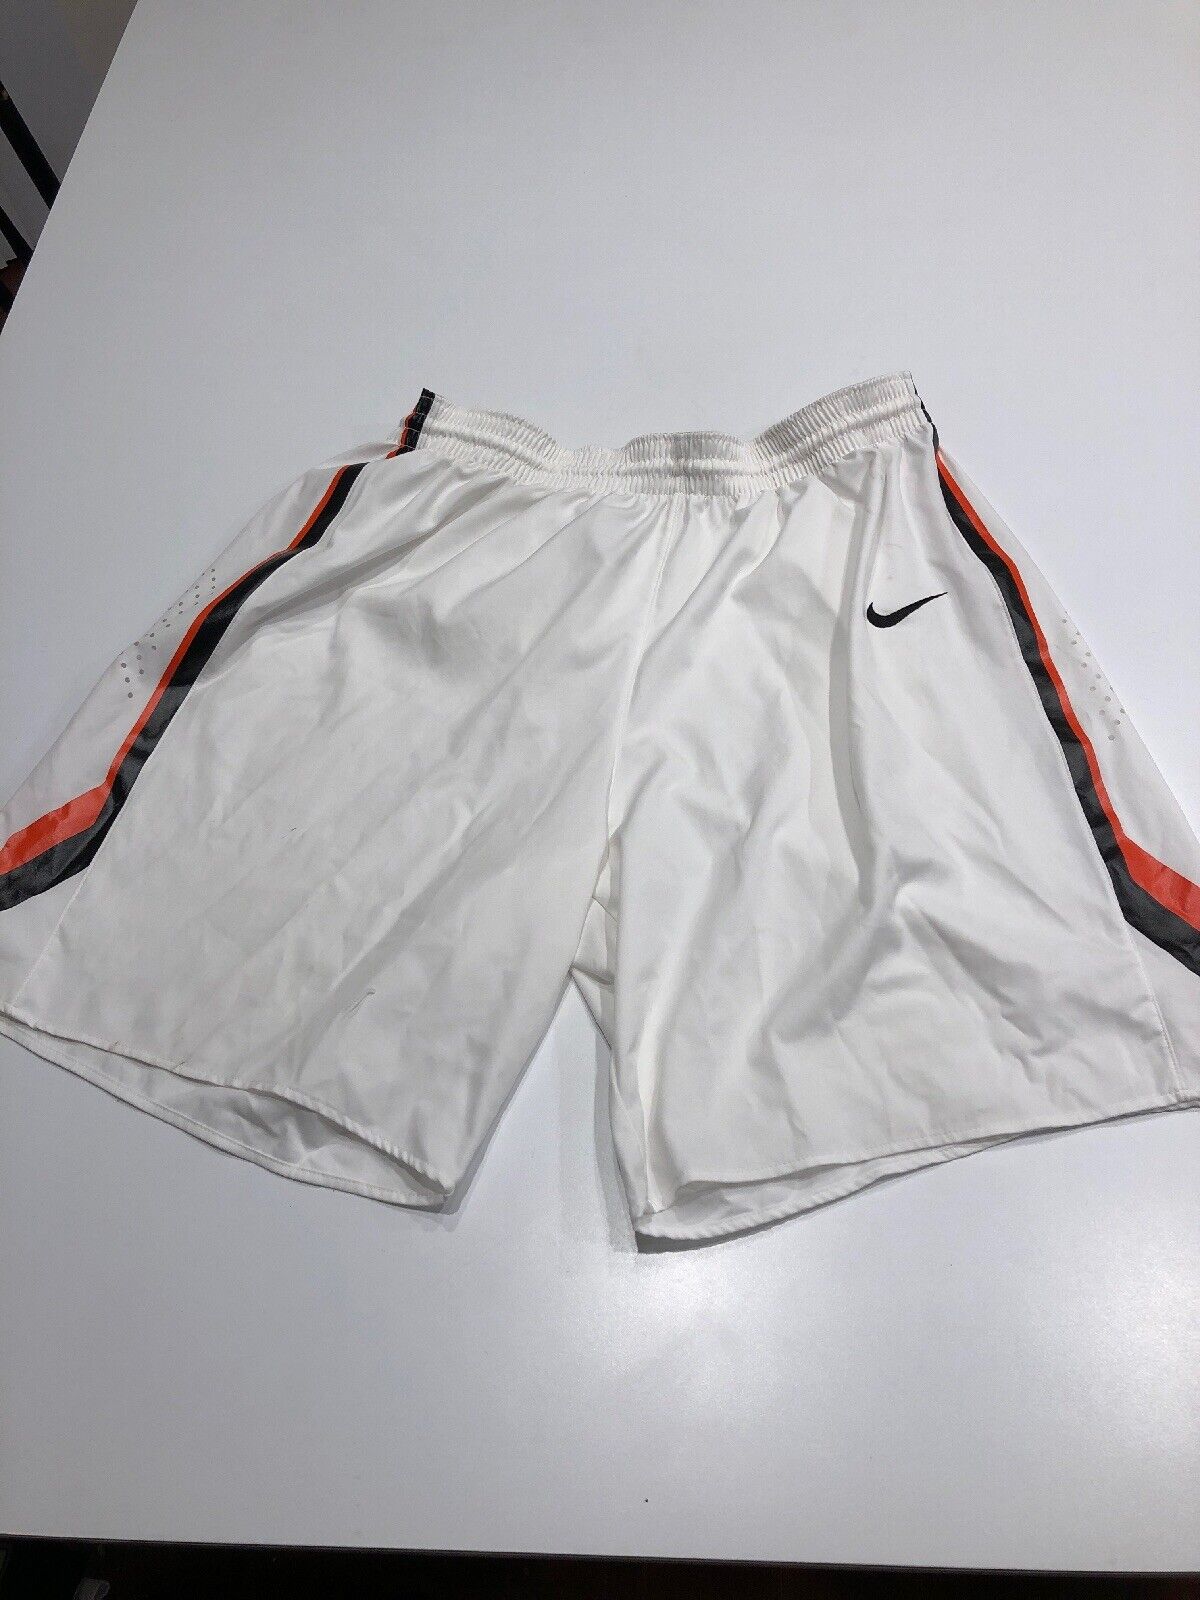 Game Worn Used Princeton Tigers Nike Basketball Shorts Size Larg